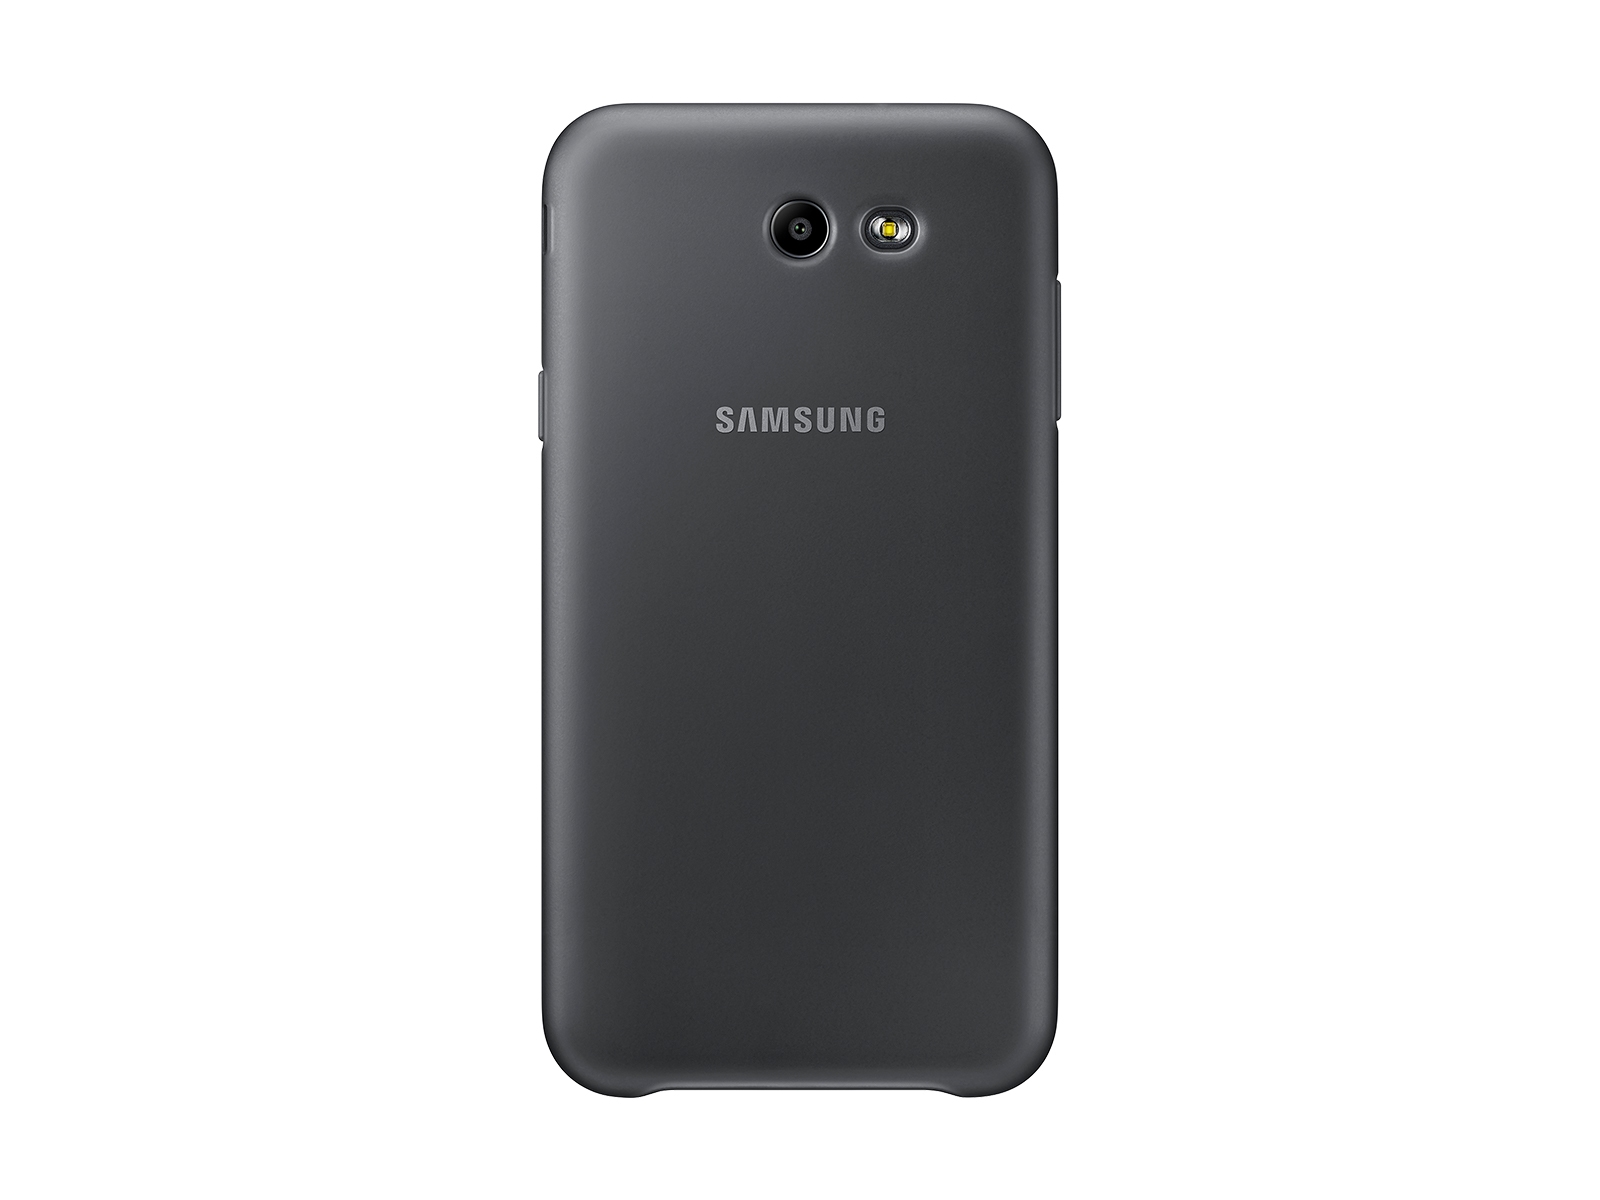 Galaxy J7 Protective Cover Black Mobile Accessories Ef Pj727cbegus Samsung Us